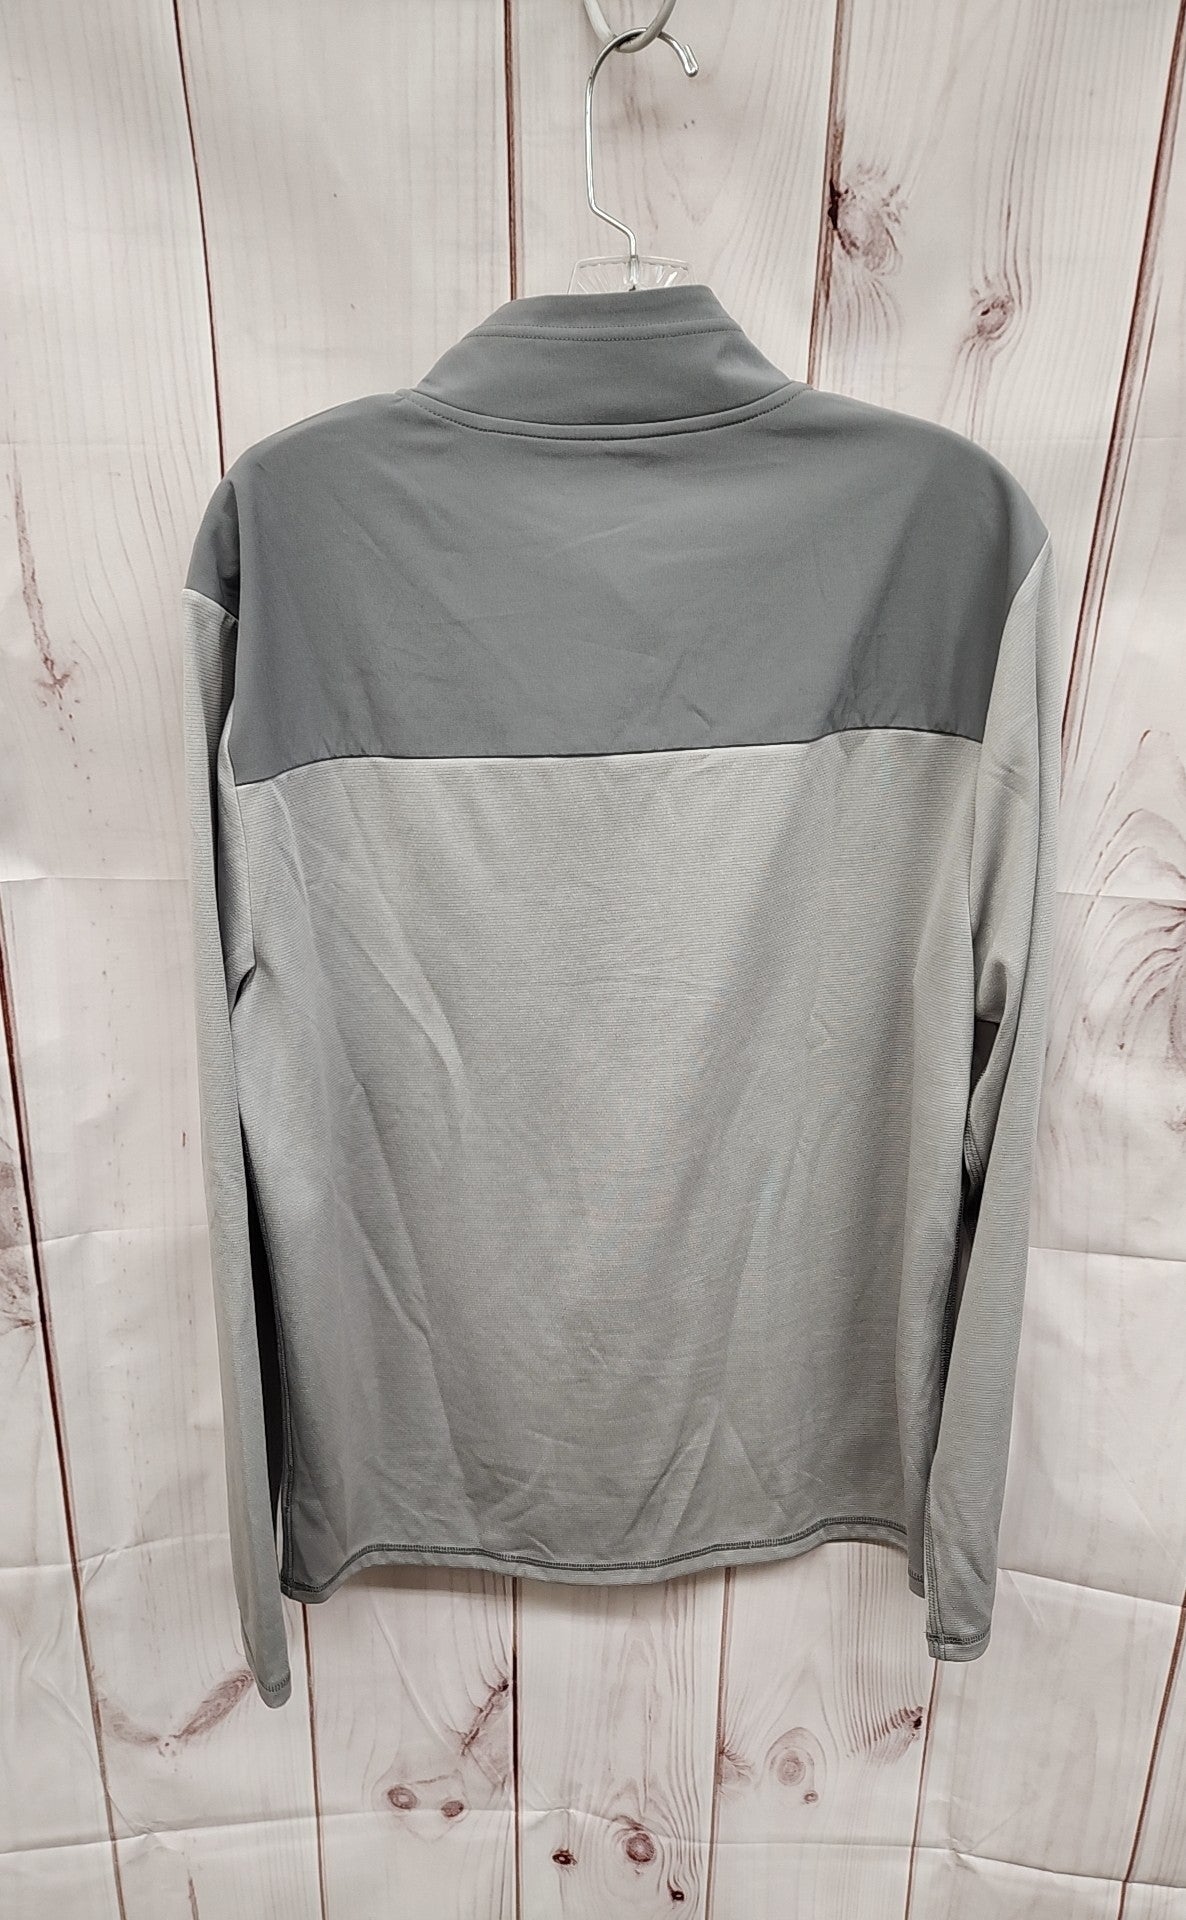 Reebok Men's Size M Gray Sweatshirt